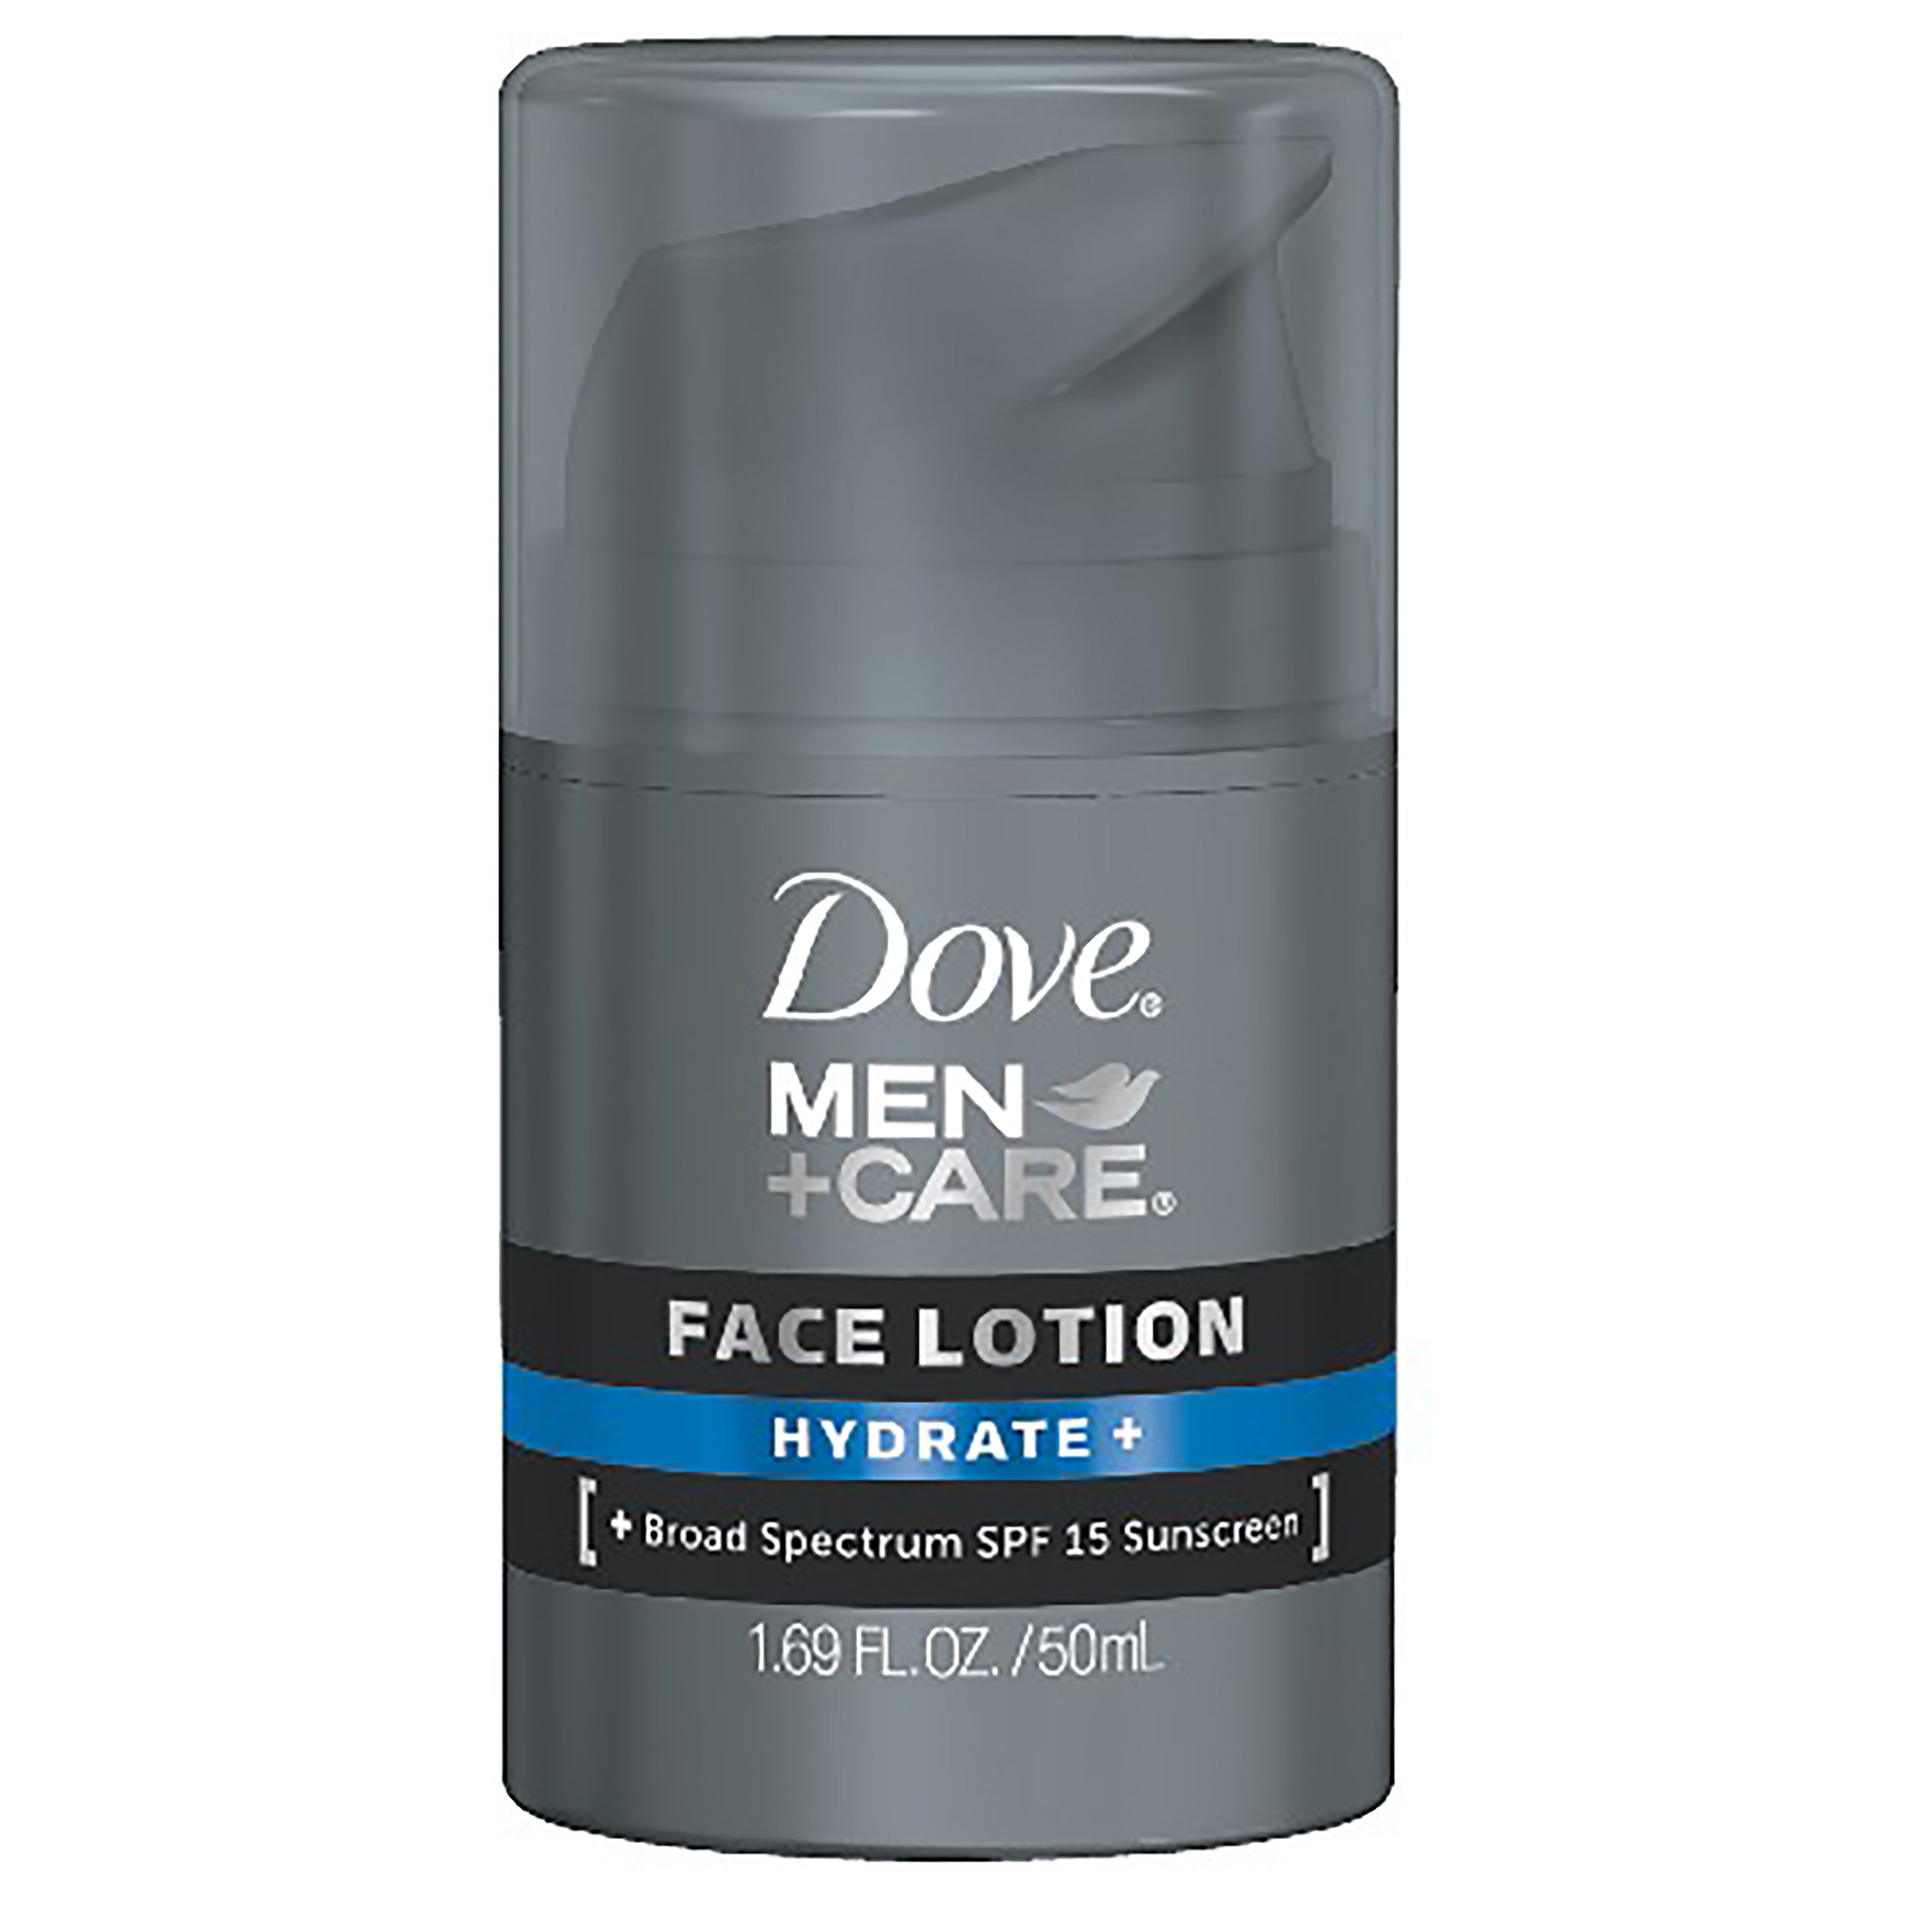 Dove Men+Care Hydrate+ Face Lotion Shop Moisturizer at H-E-B